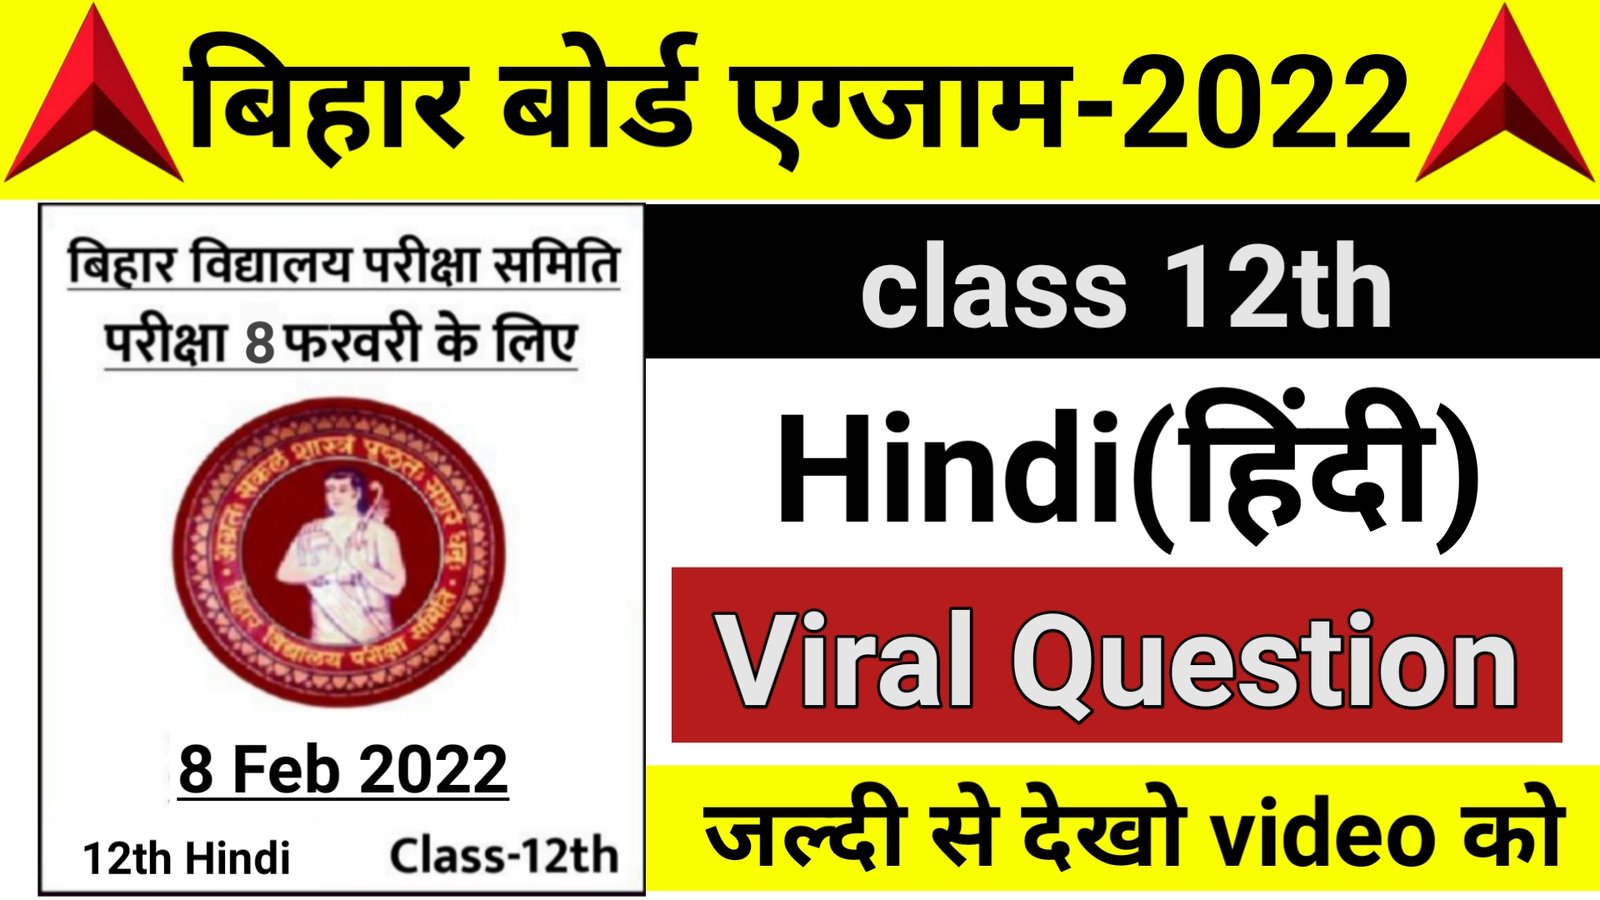 Hindi Model Paper Solutions Bihar Board| Model Paper 2022 class 12th Bihar Board | BIHAR CENTER